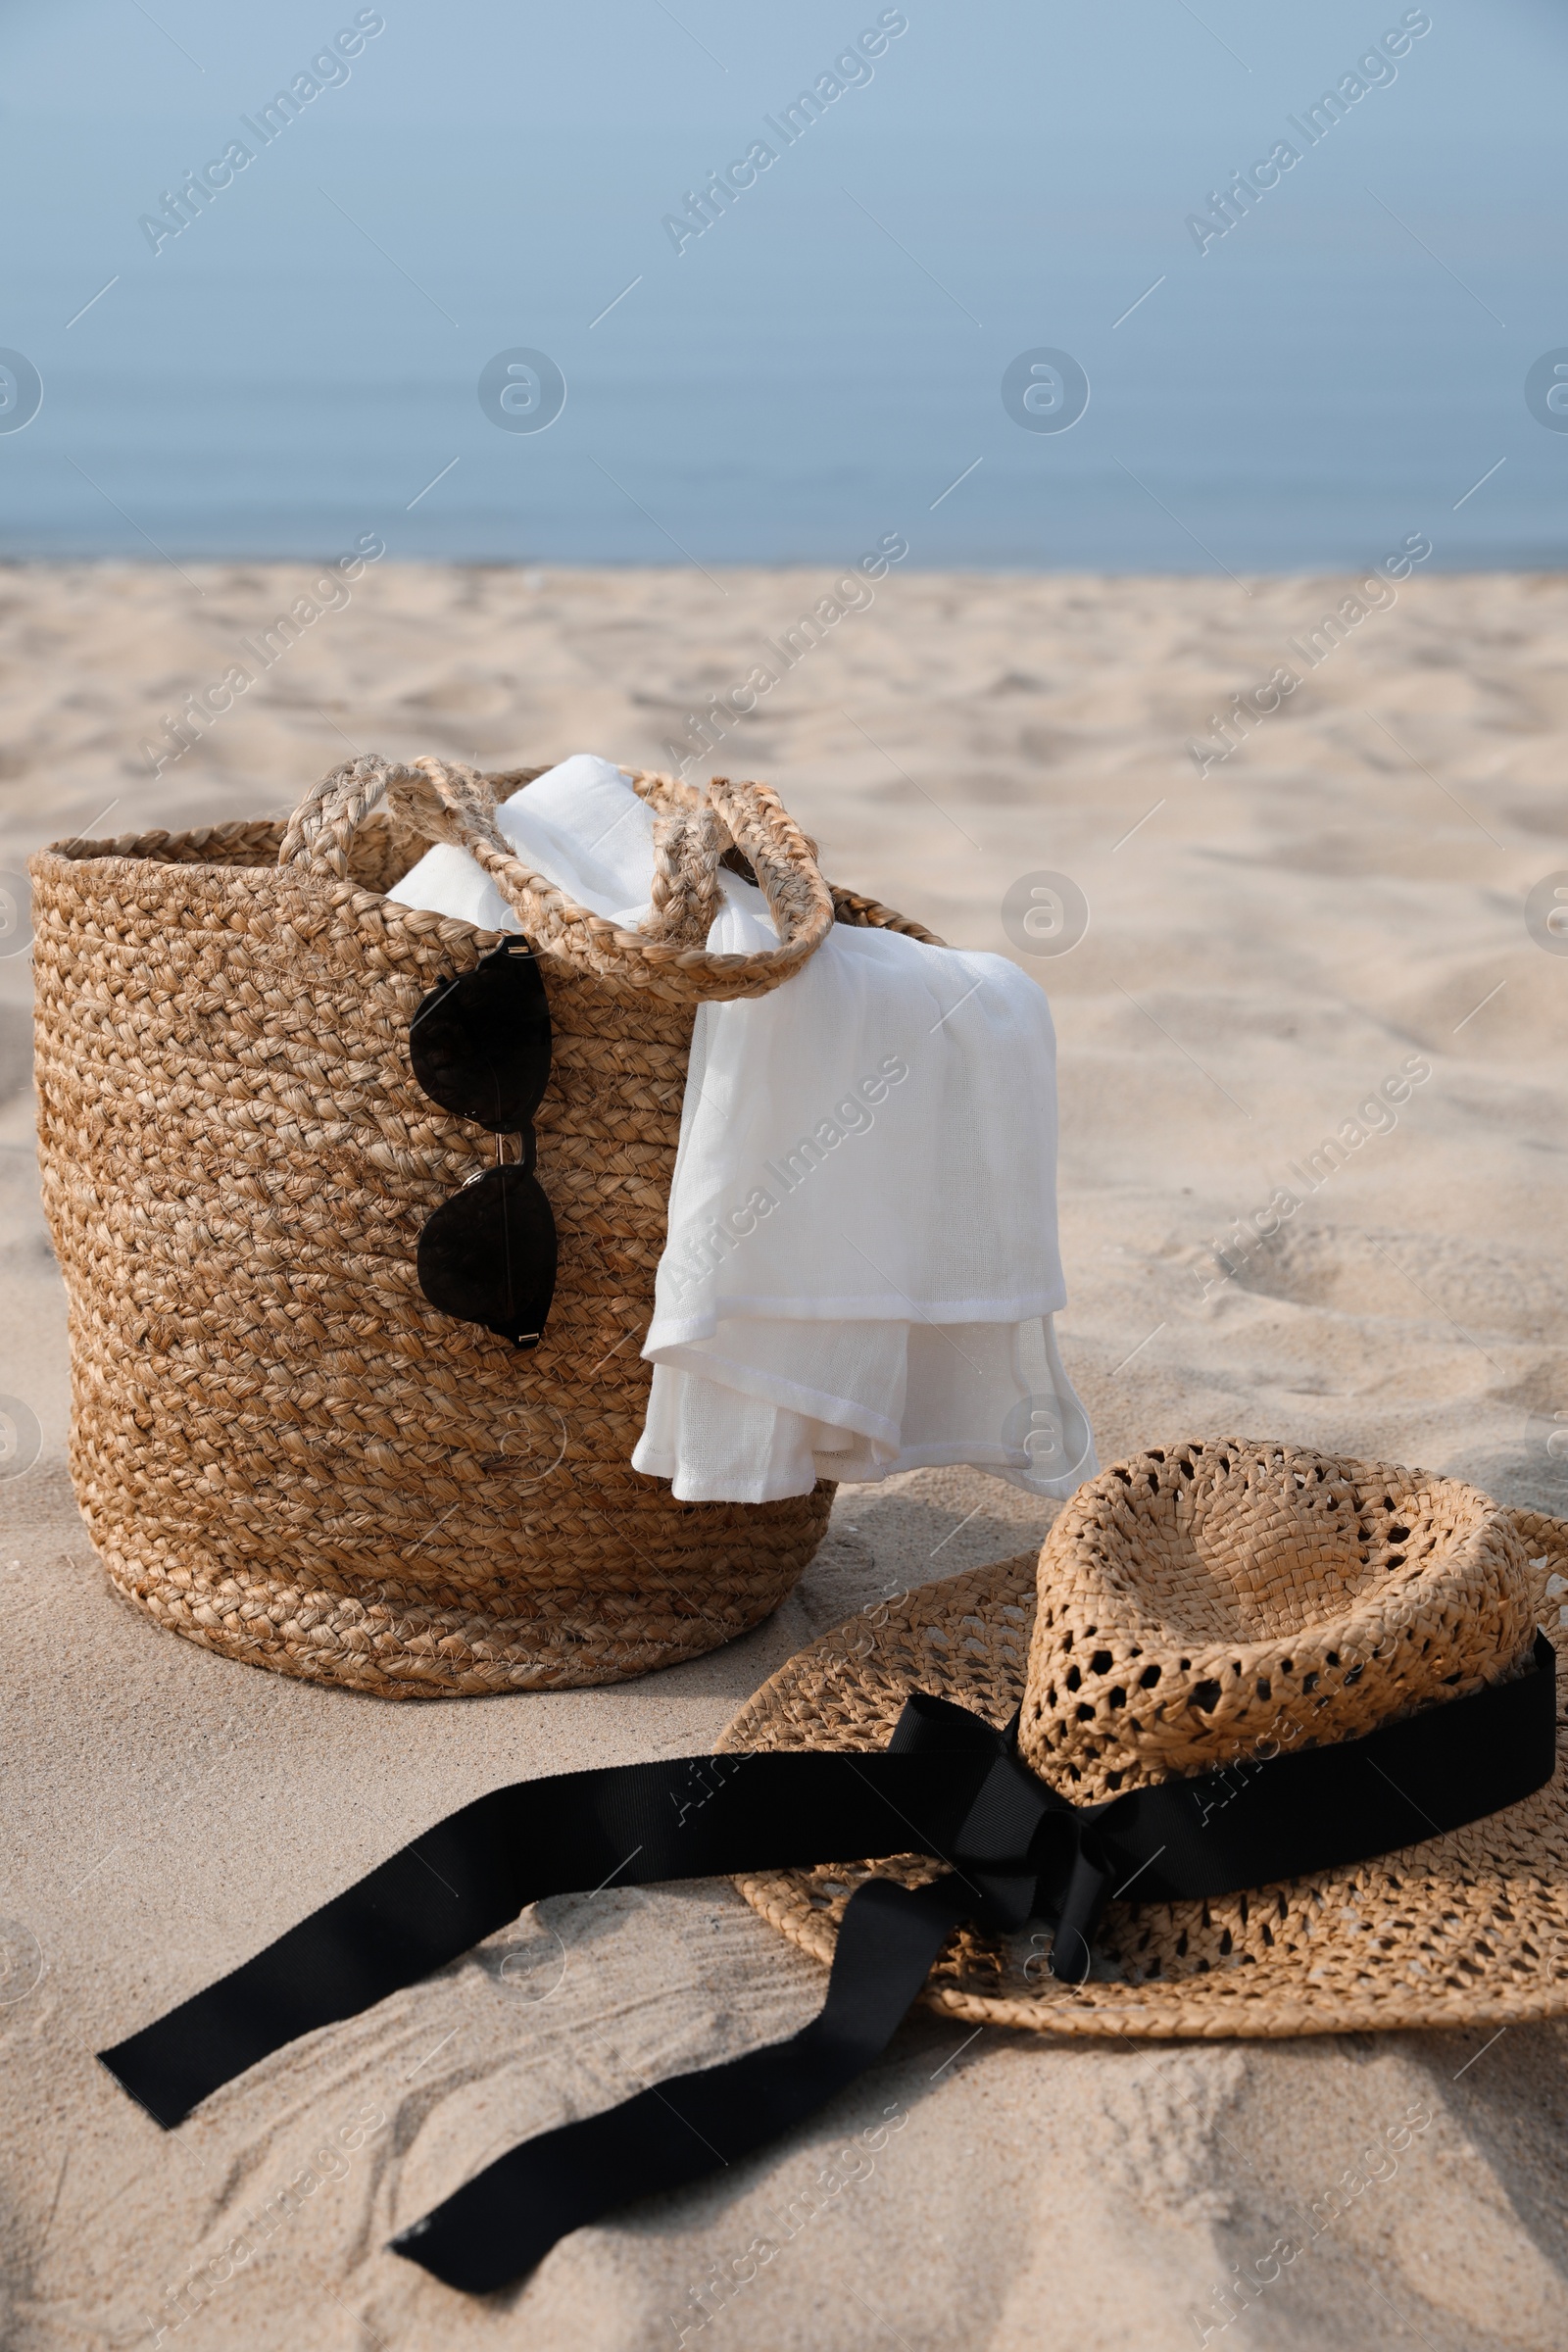 Photo of Beach bag, towel, sunglasses and hat on sandy seashore